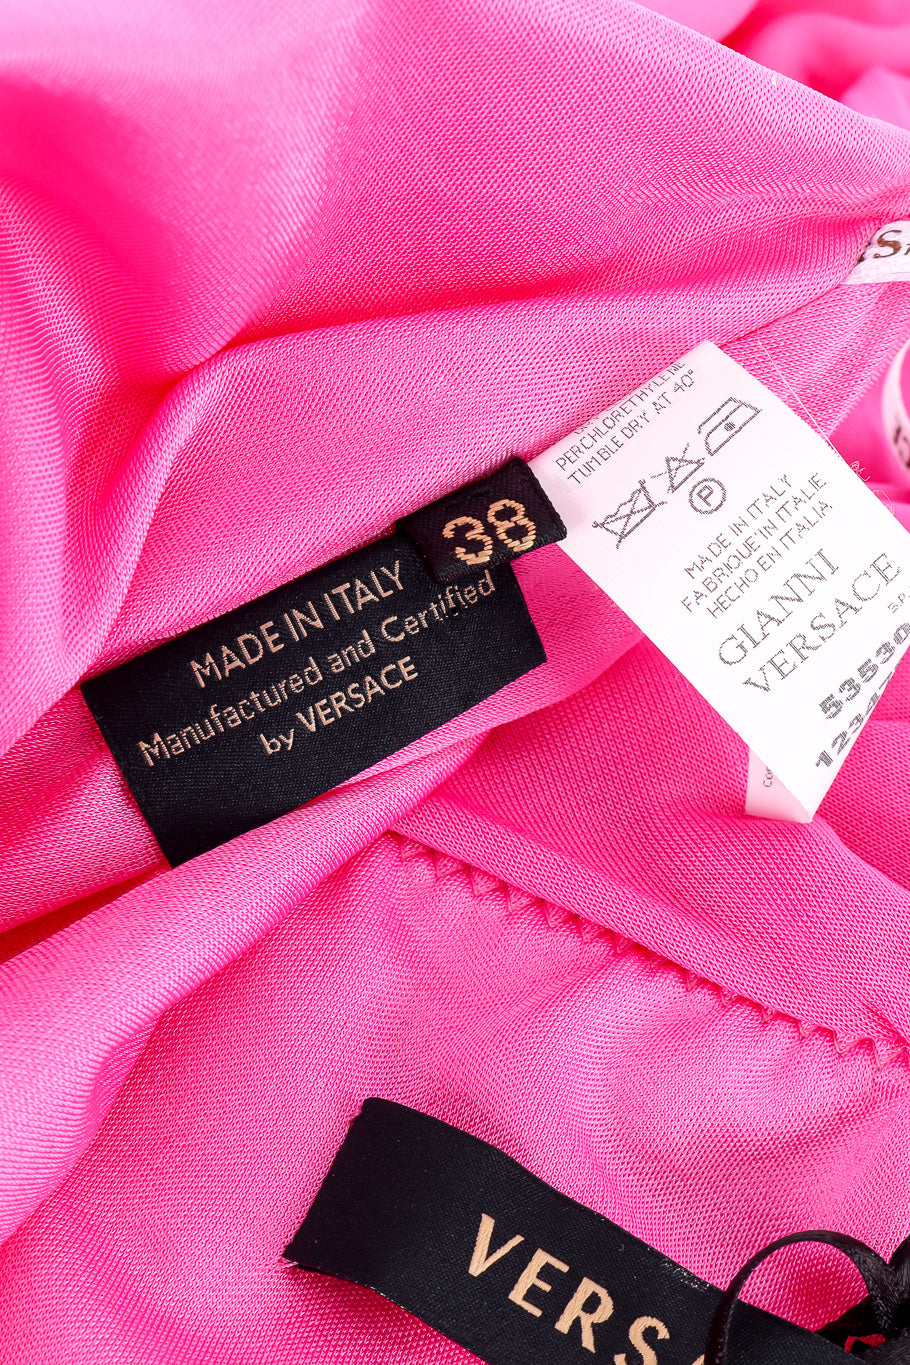 Versace Ruche One-Shoulder Dress size and fabric content label closeup @Recessla